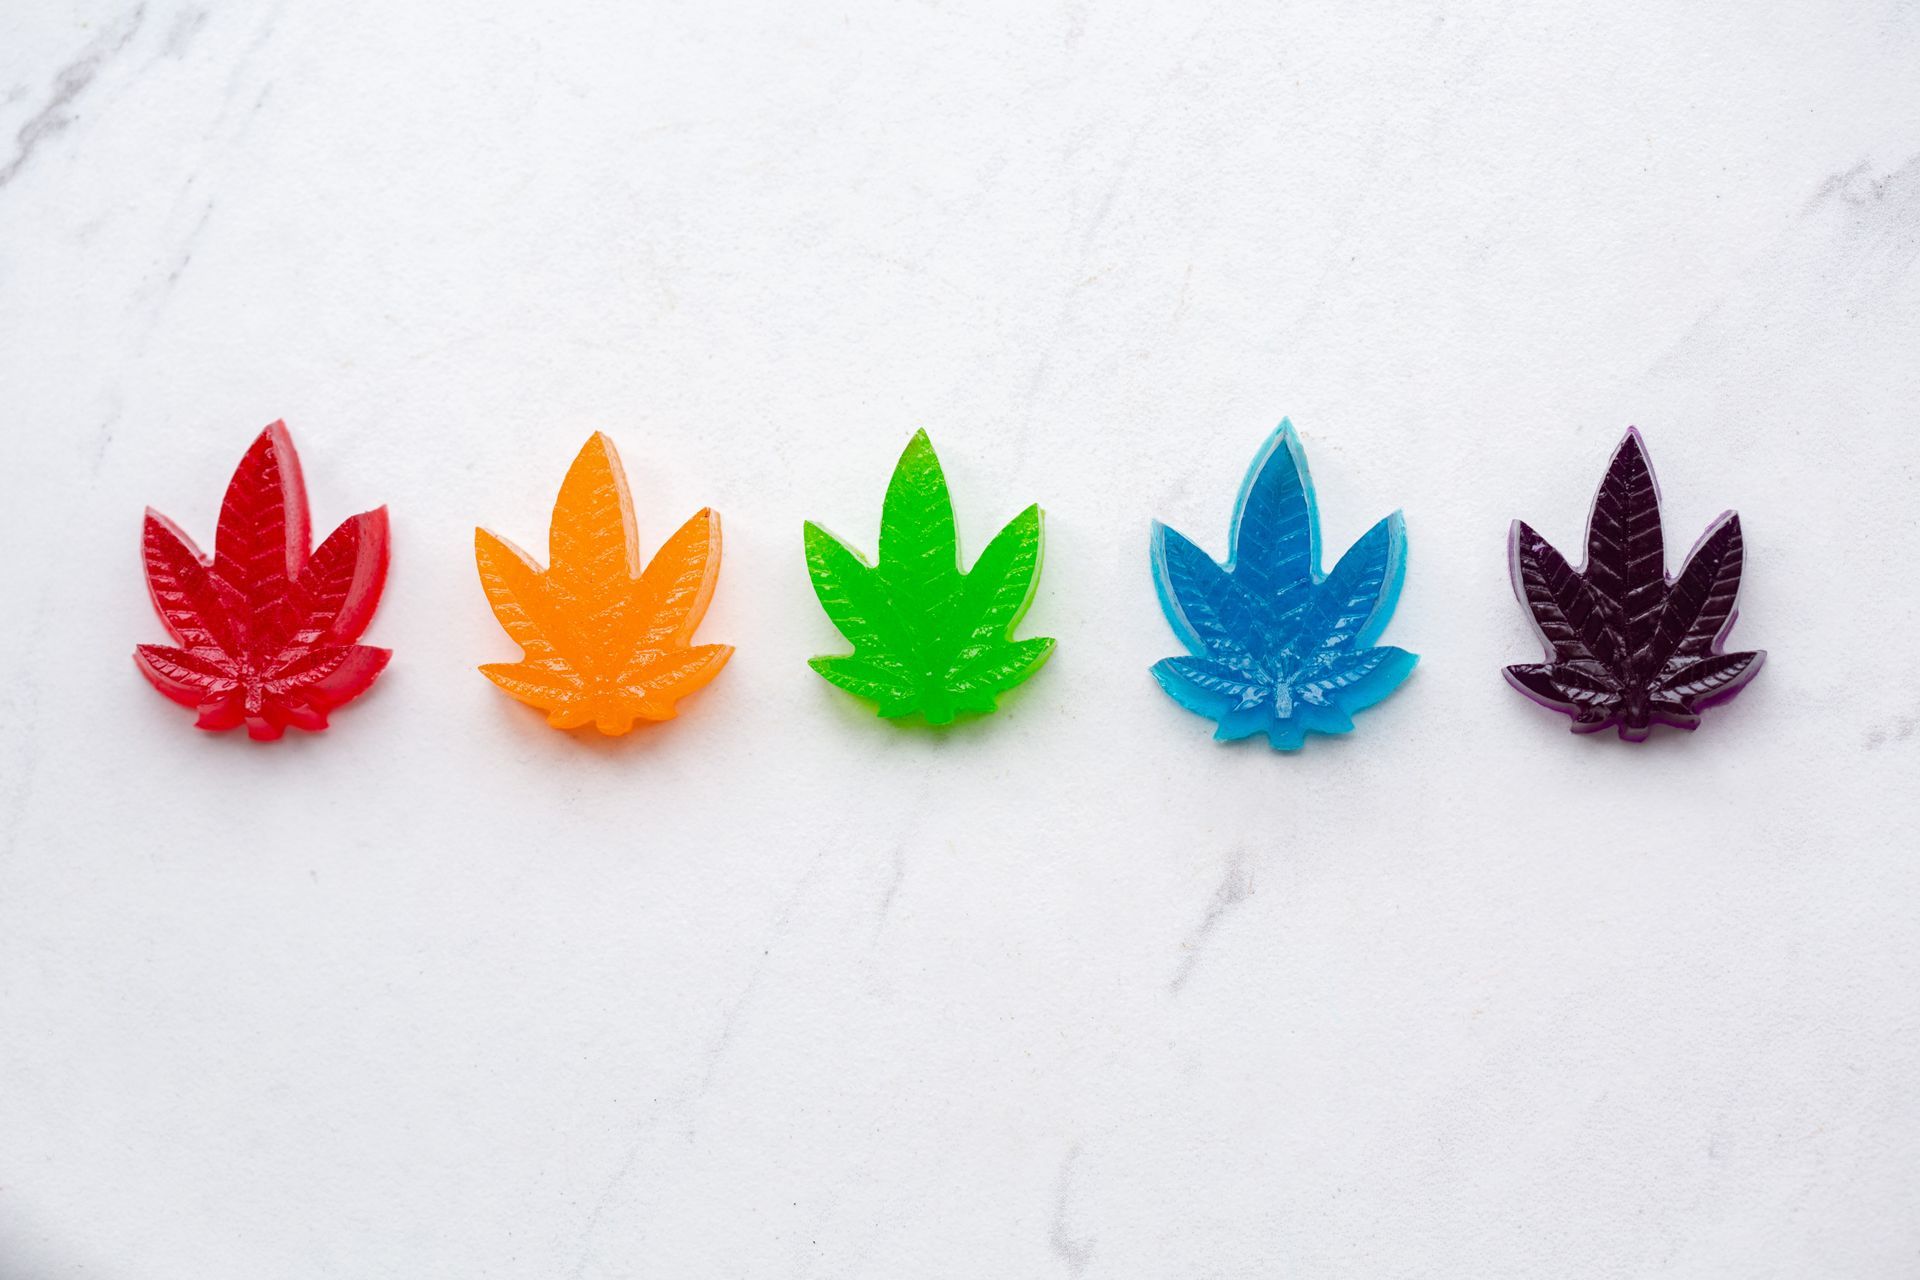 CBD gummies (shaped like cannabis leaves) in red, orange, green, blue, and purple.